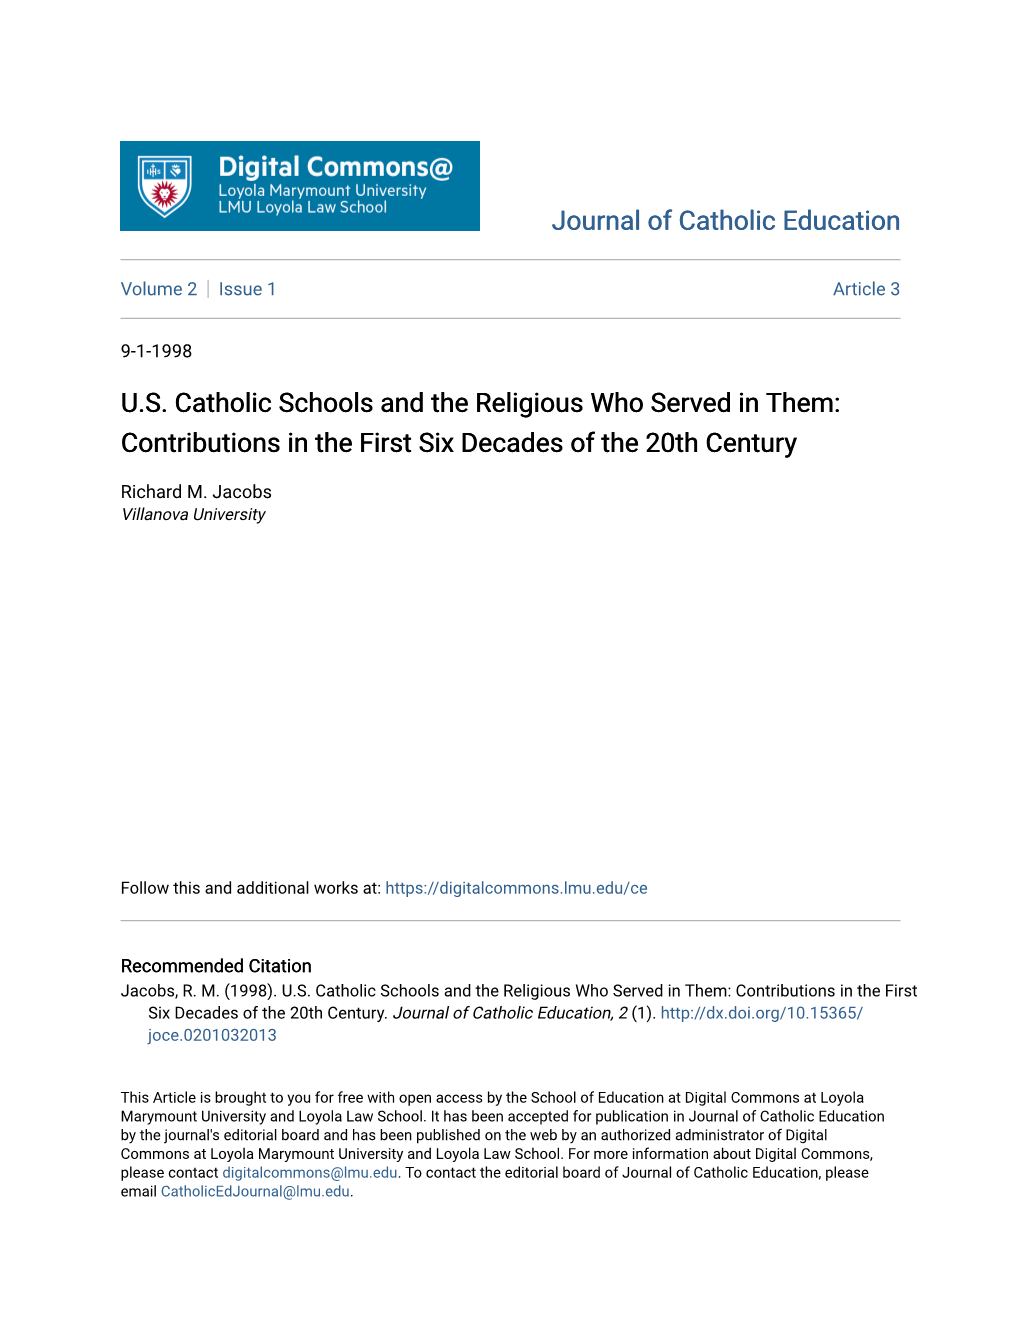 US Catholic Schools and the Religious